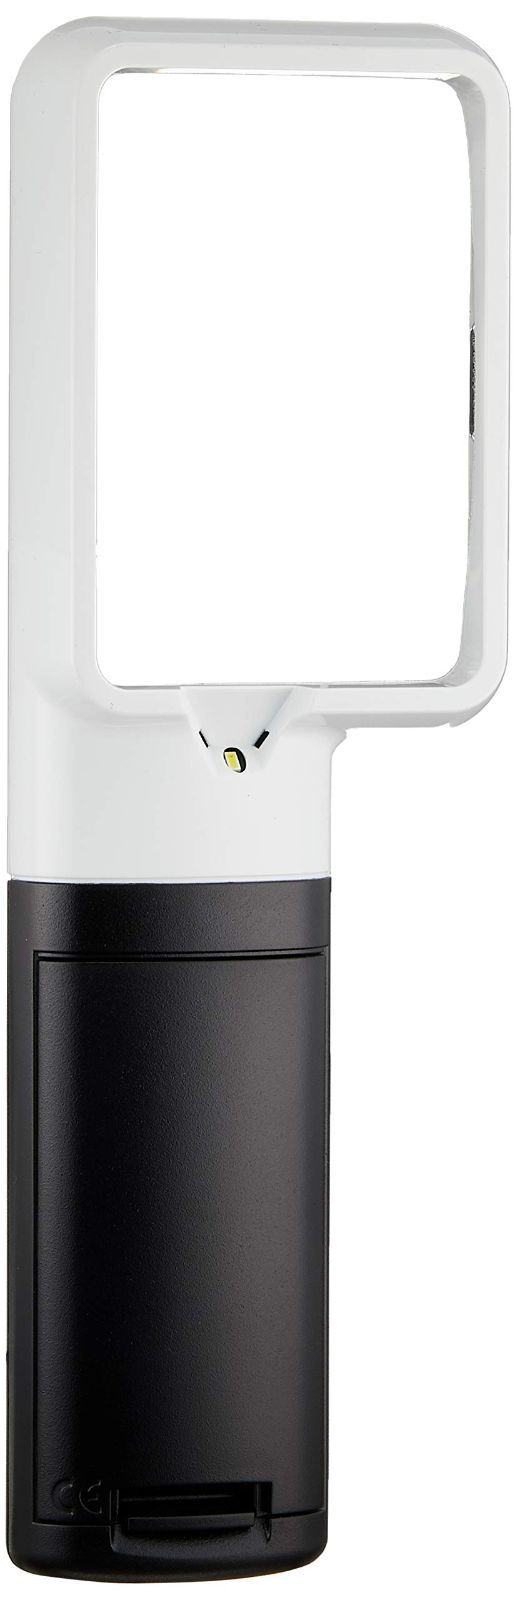 ESCHENBACH ルーペ mobiluxLED+mobase LEDワイドライトルーペ専用スタンド 50×75mm(3.5倍) 151 